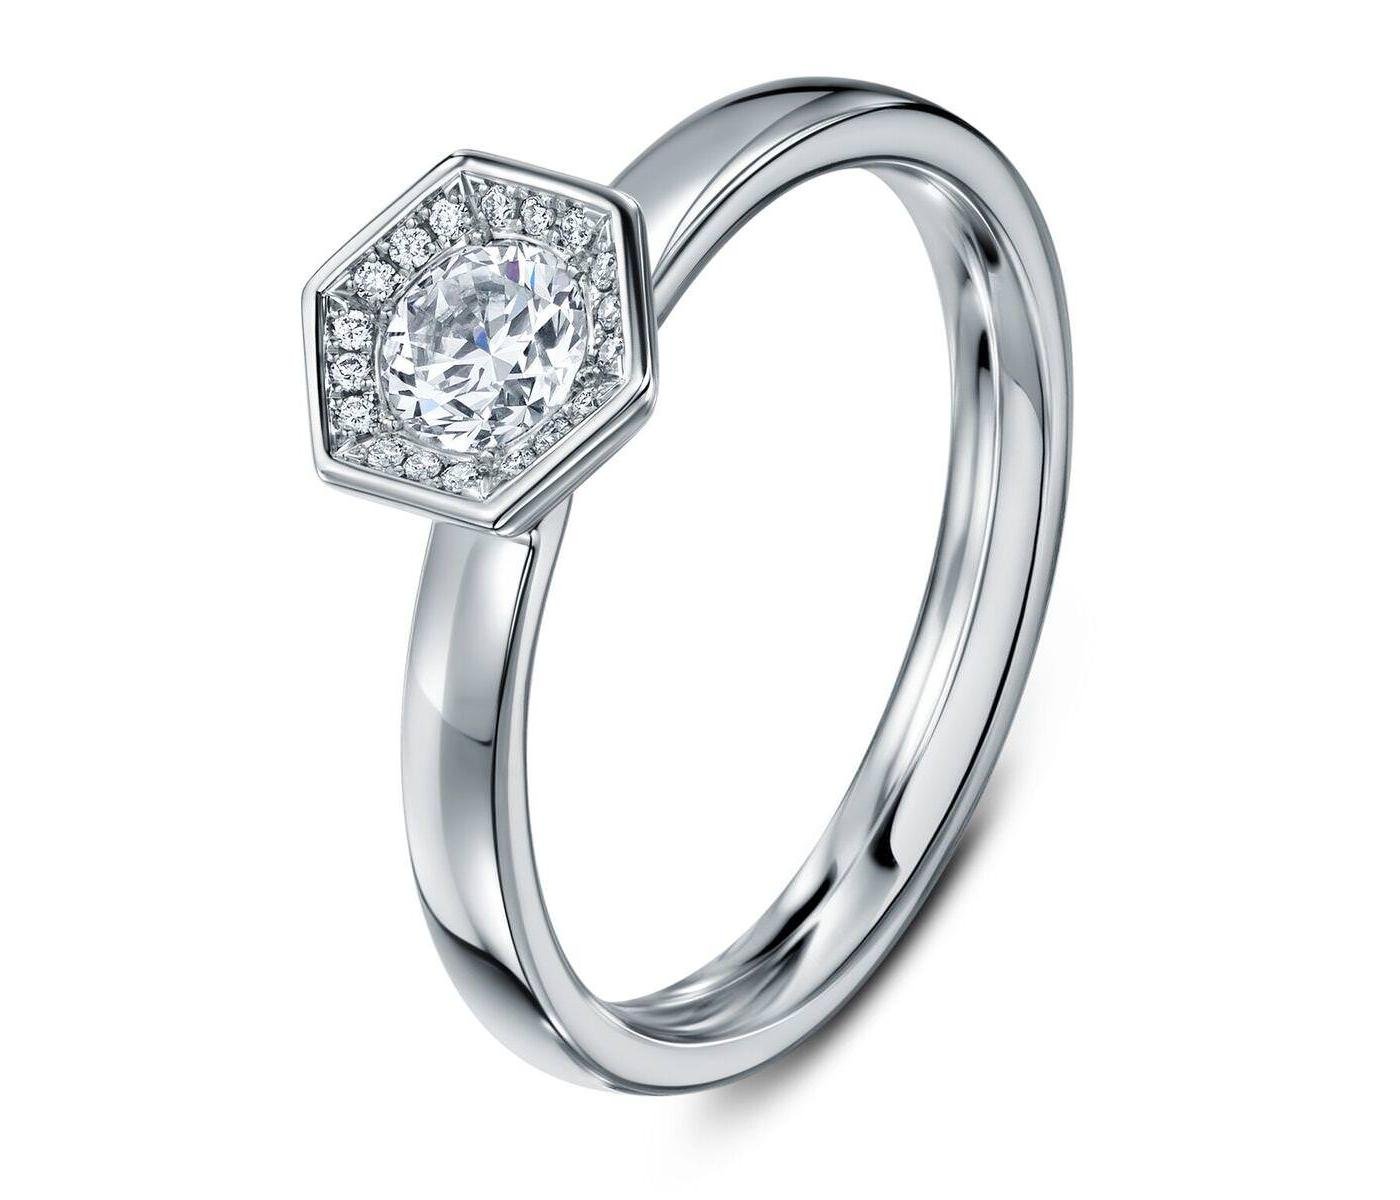 Ring by Andrew Geoghegan